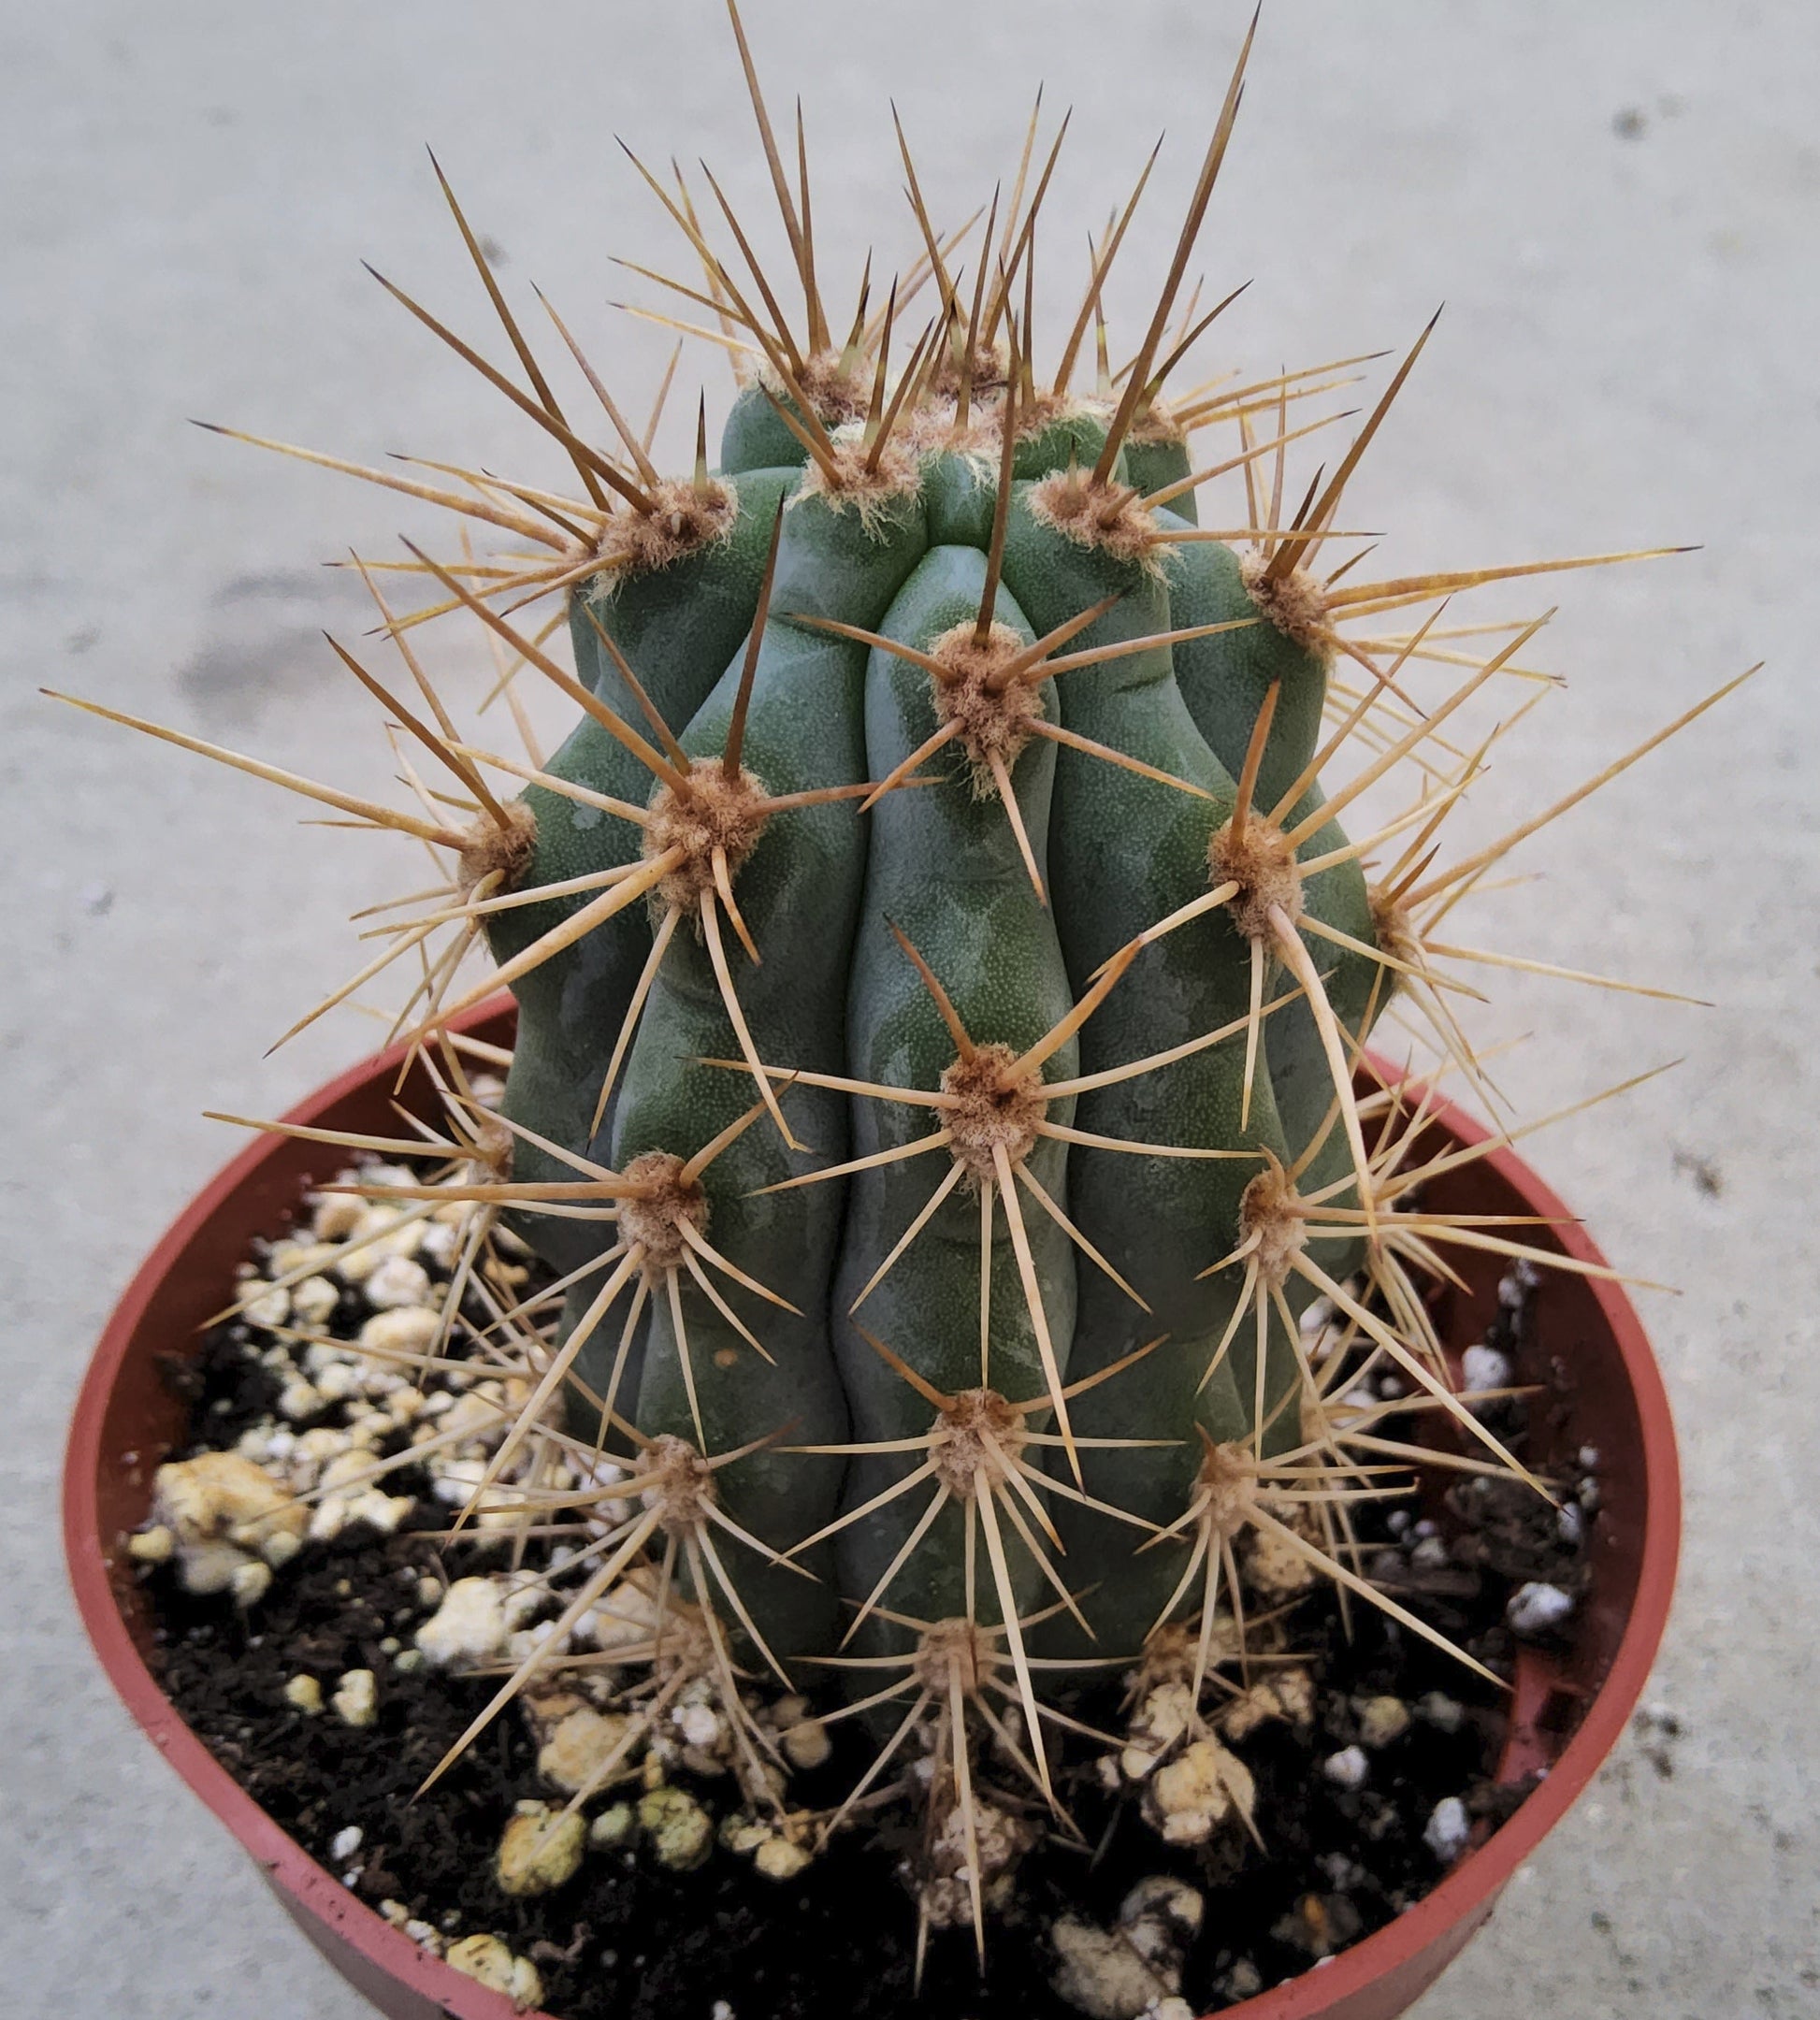 Browningia hertlingiana Live Cactus Growing in 4 Inch